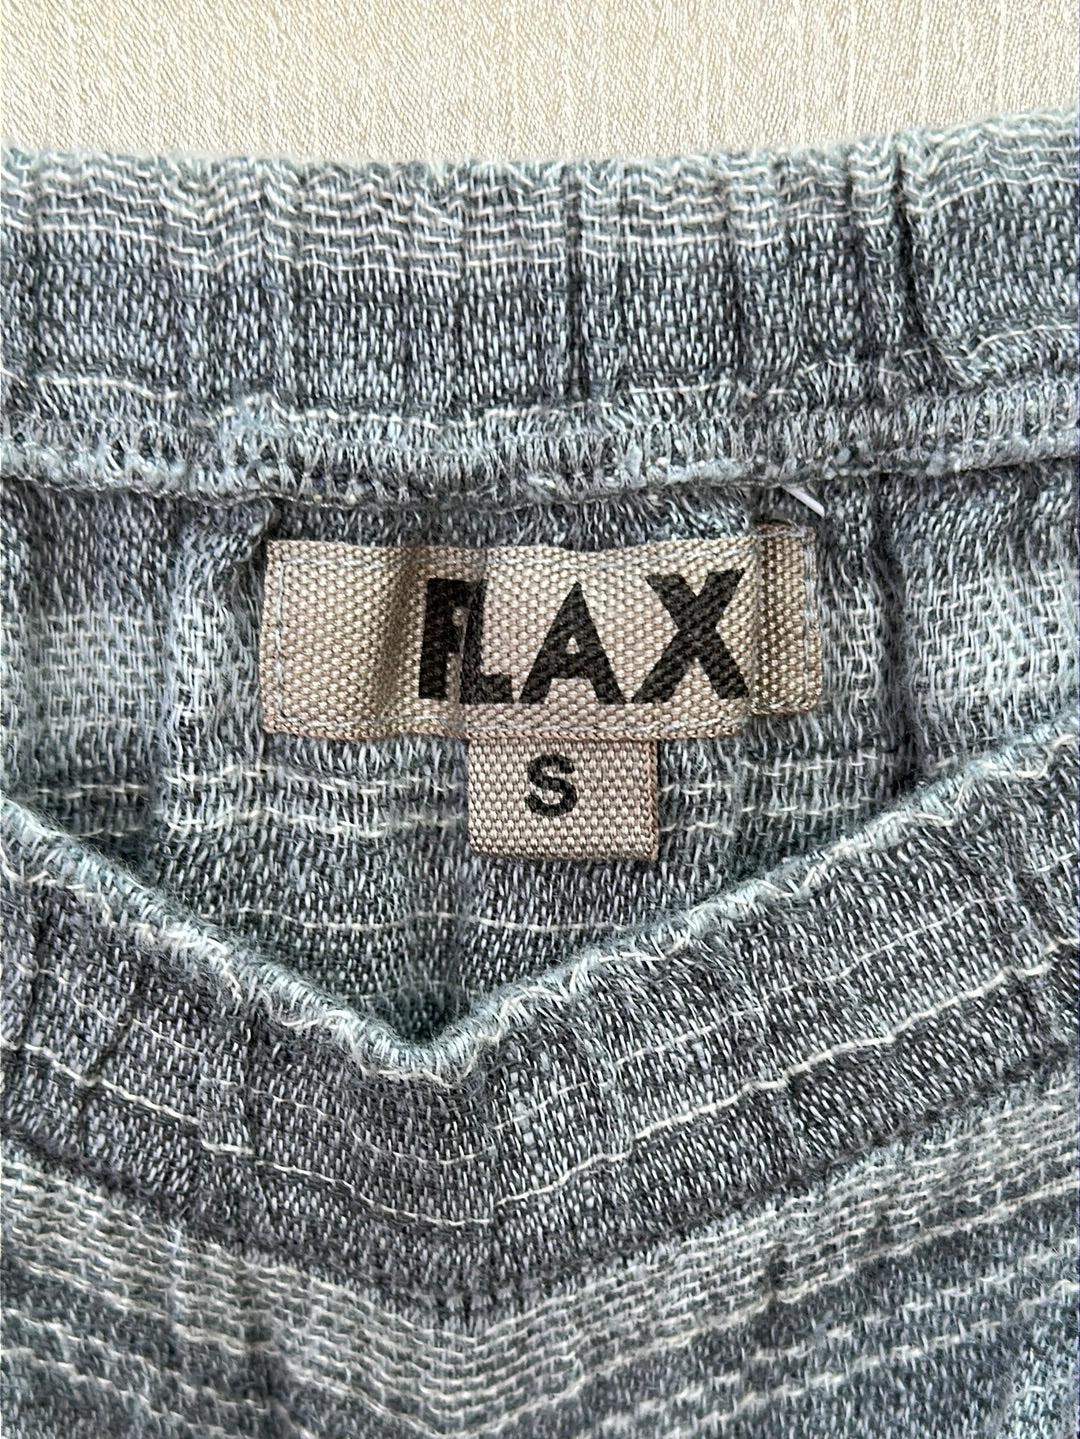 FLAX grey Stripe Lightweight Loose Weave Linen Midi Skirt - S